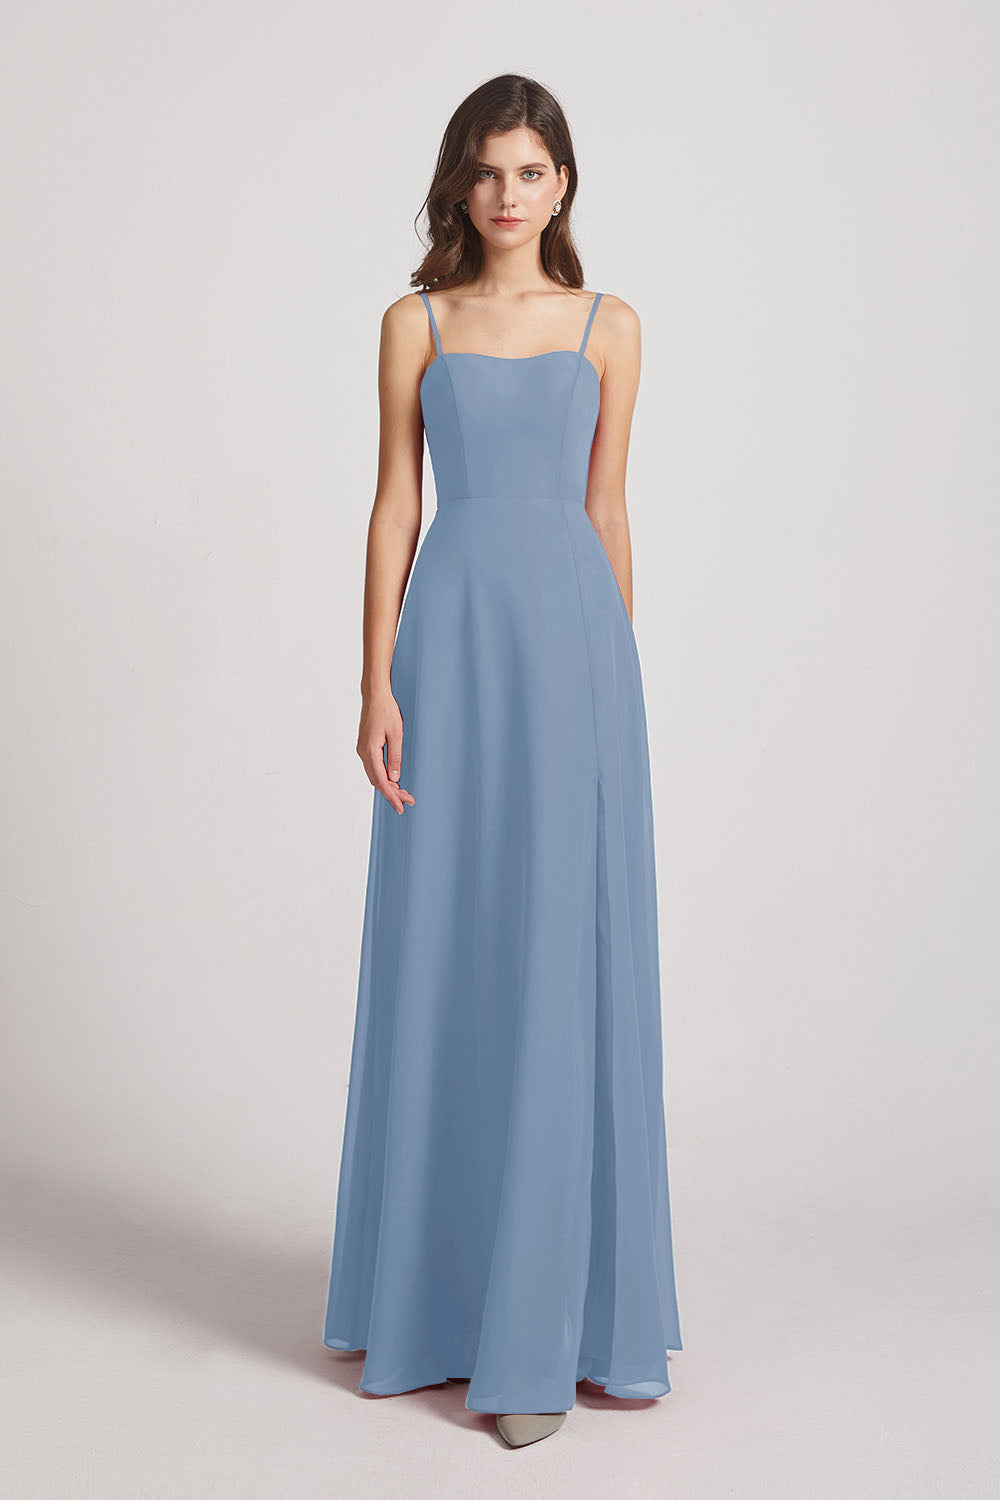 Alfa Bridal Dusty Blue Spaghetti Straps Long Chiffon Bridesmaid Dresses with Side Slit (AF0112)